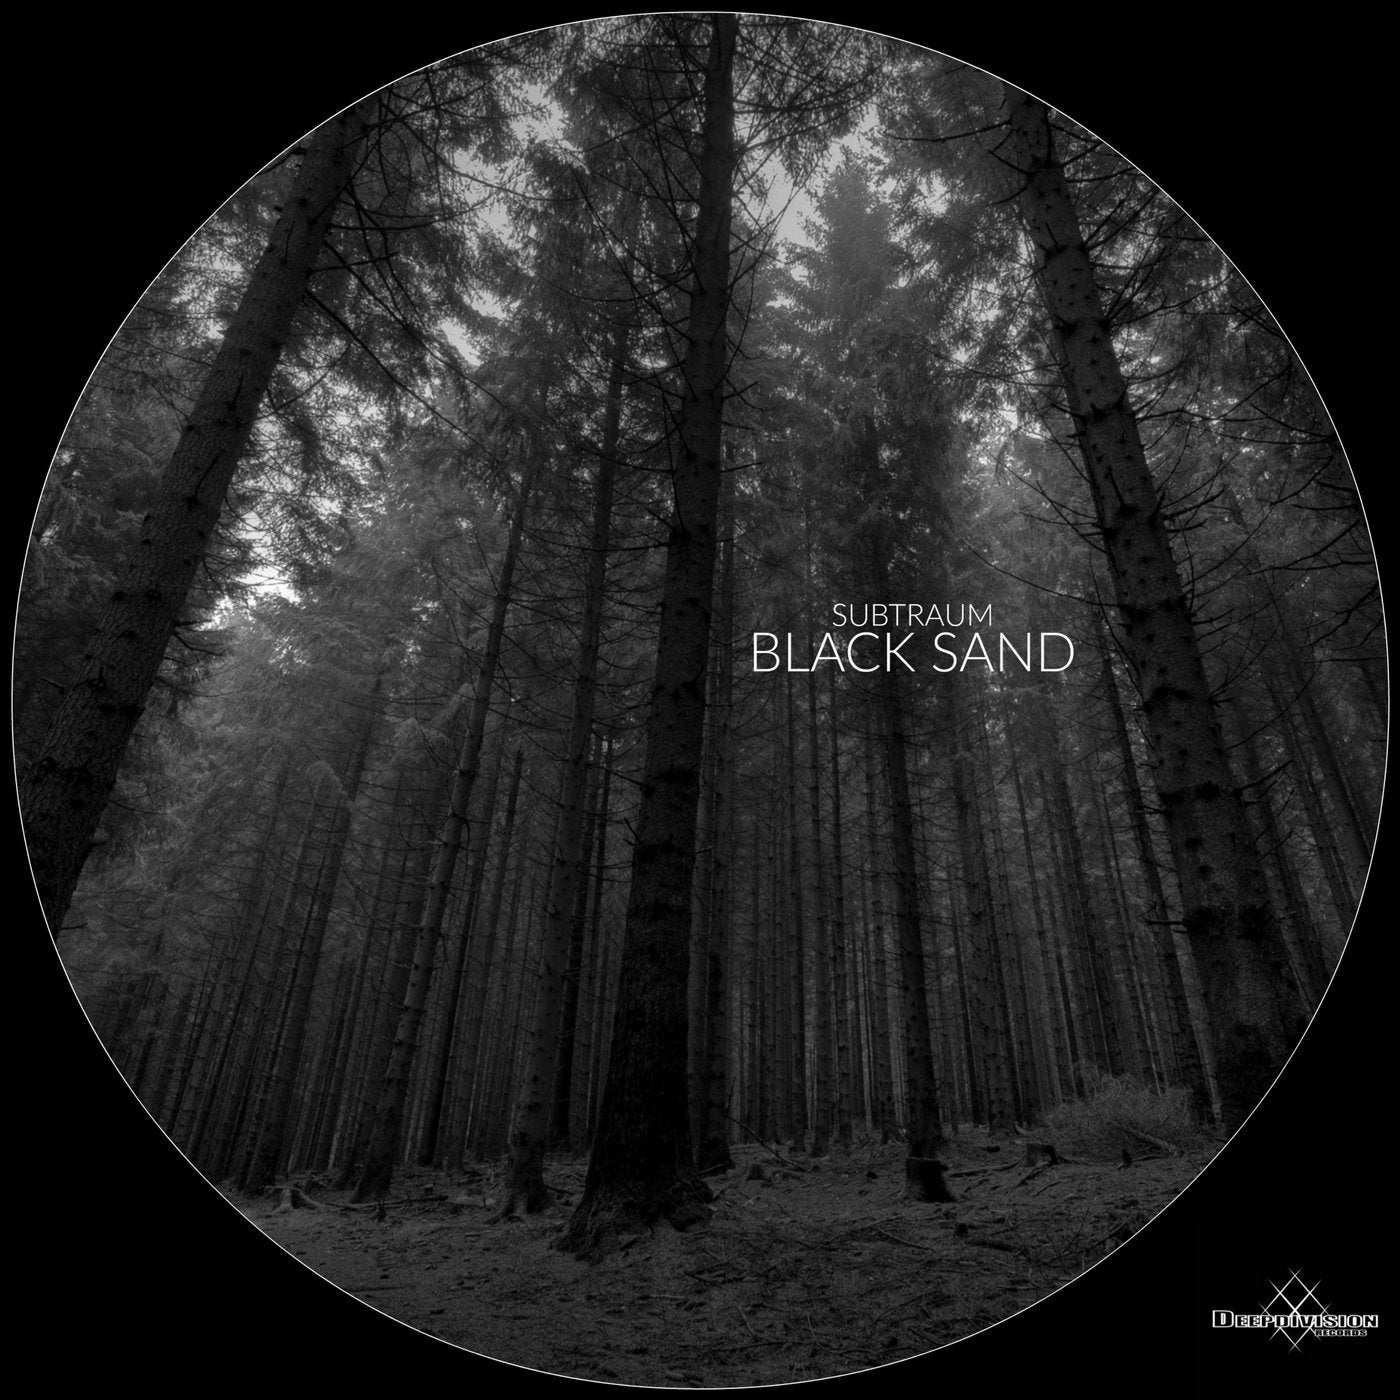 Black Sand